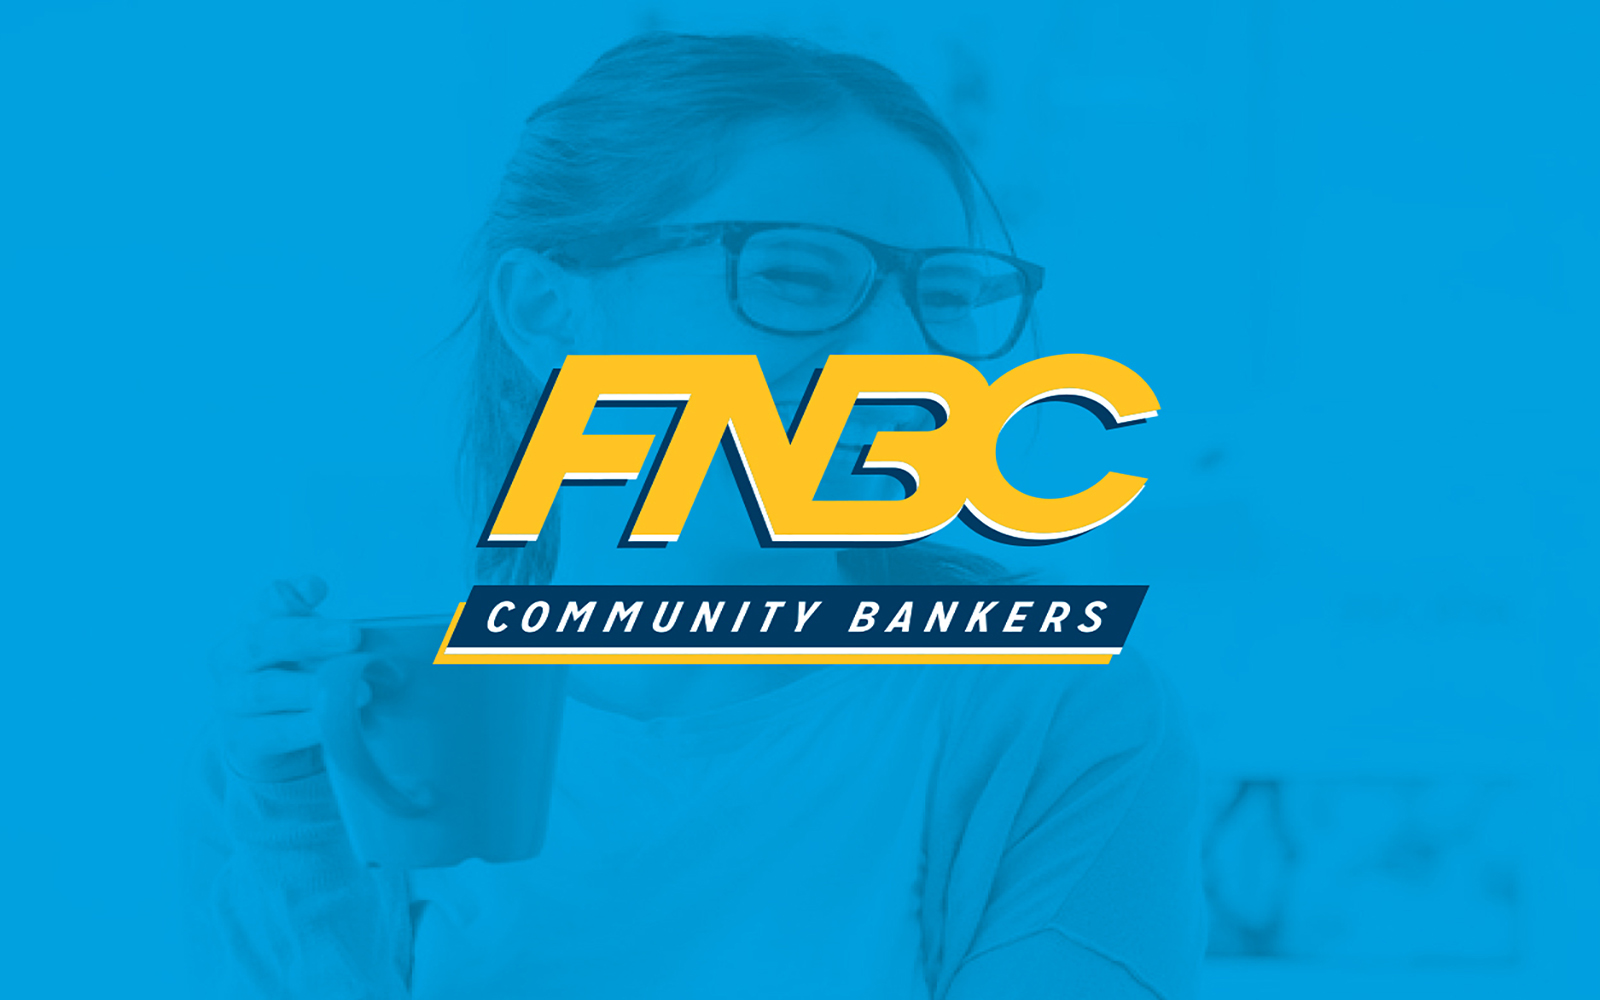 FNBC Community Bankers